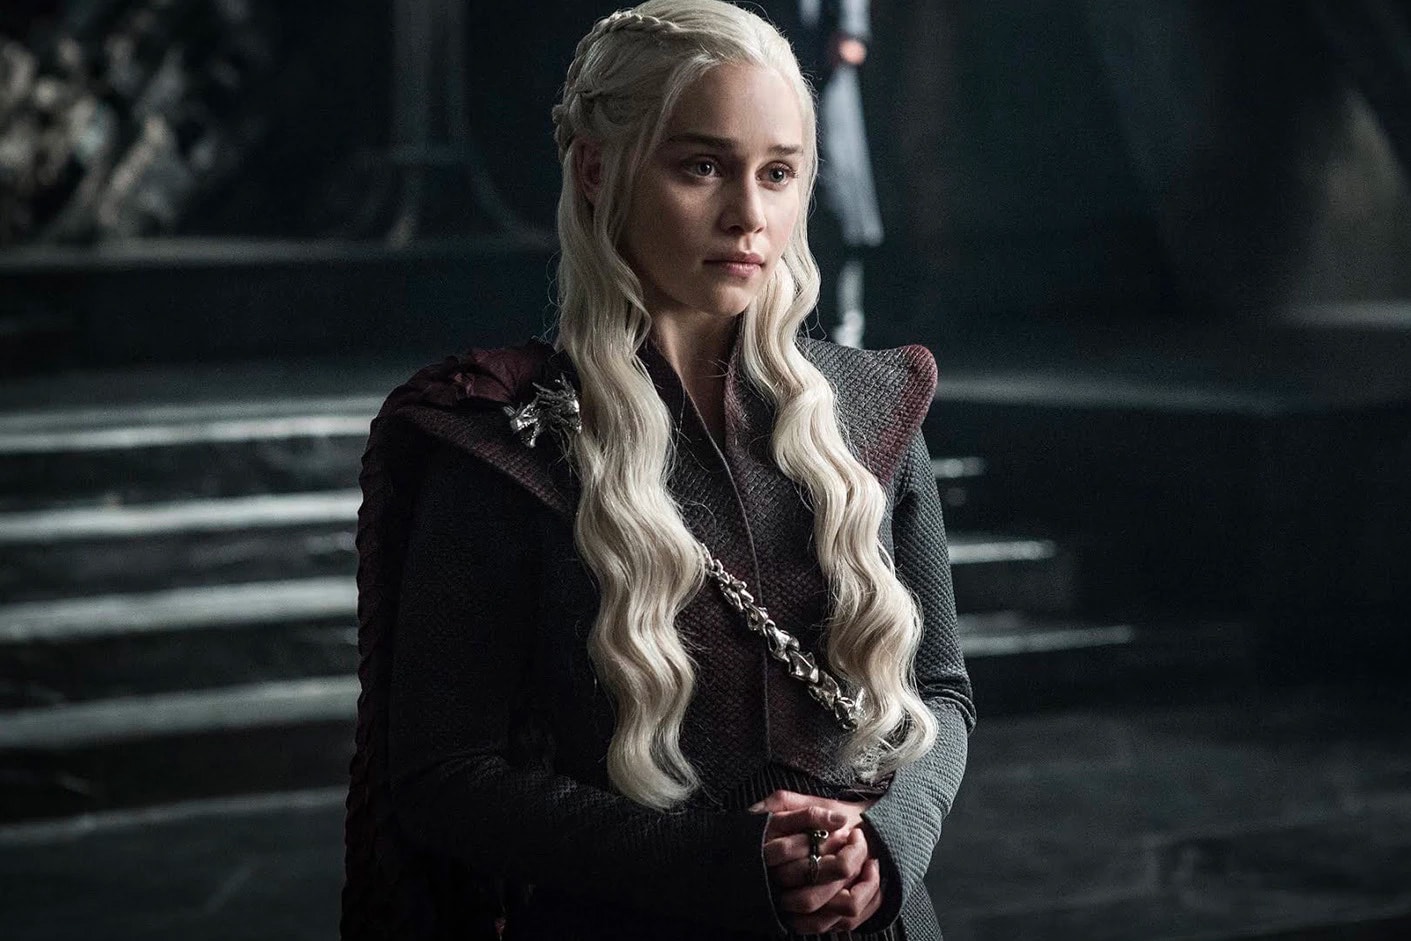 Emilia Clarke Game of Thrones Season 8 finale spoiler Daenerys targaryen iron throne teaser hints clues plot twist hbo